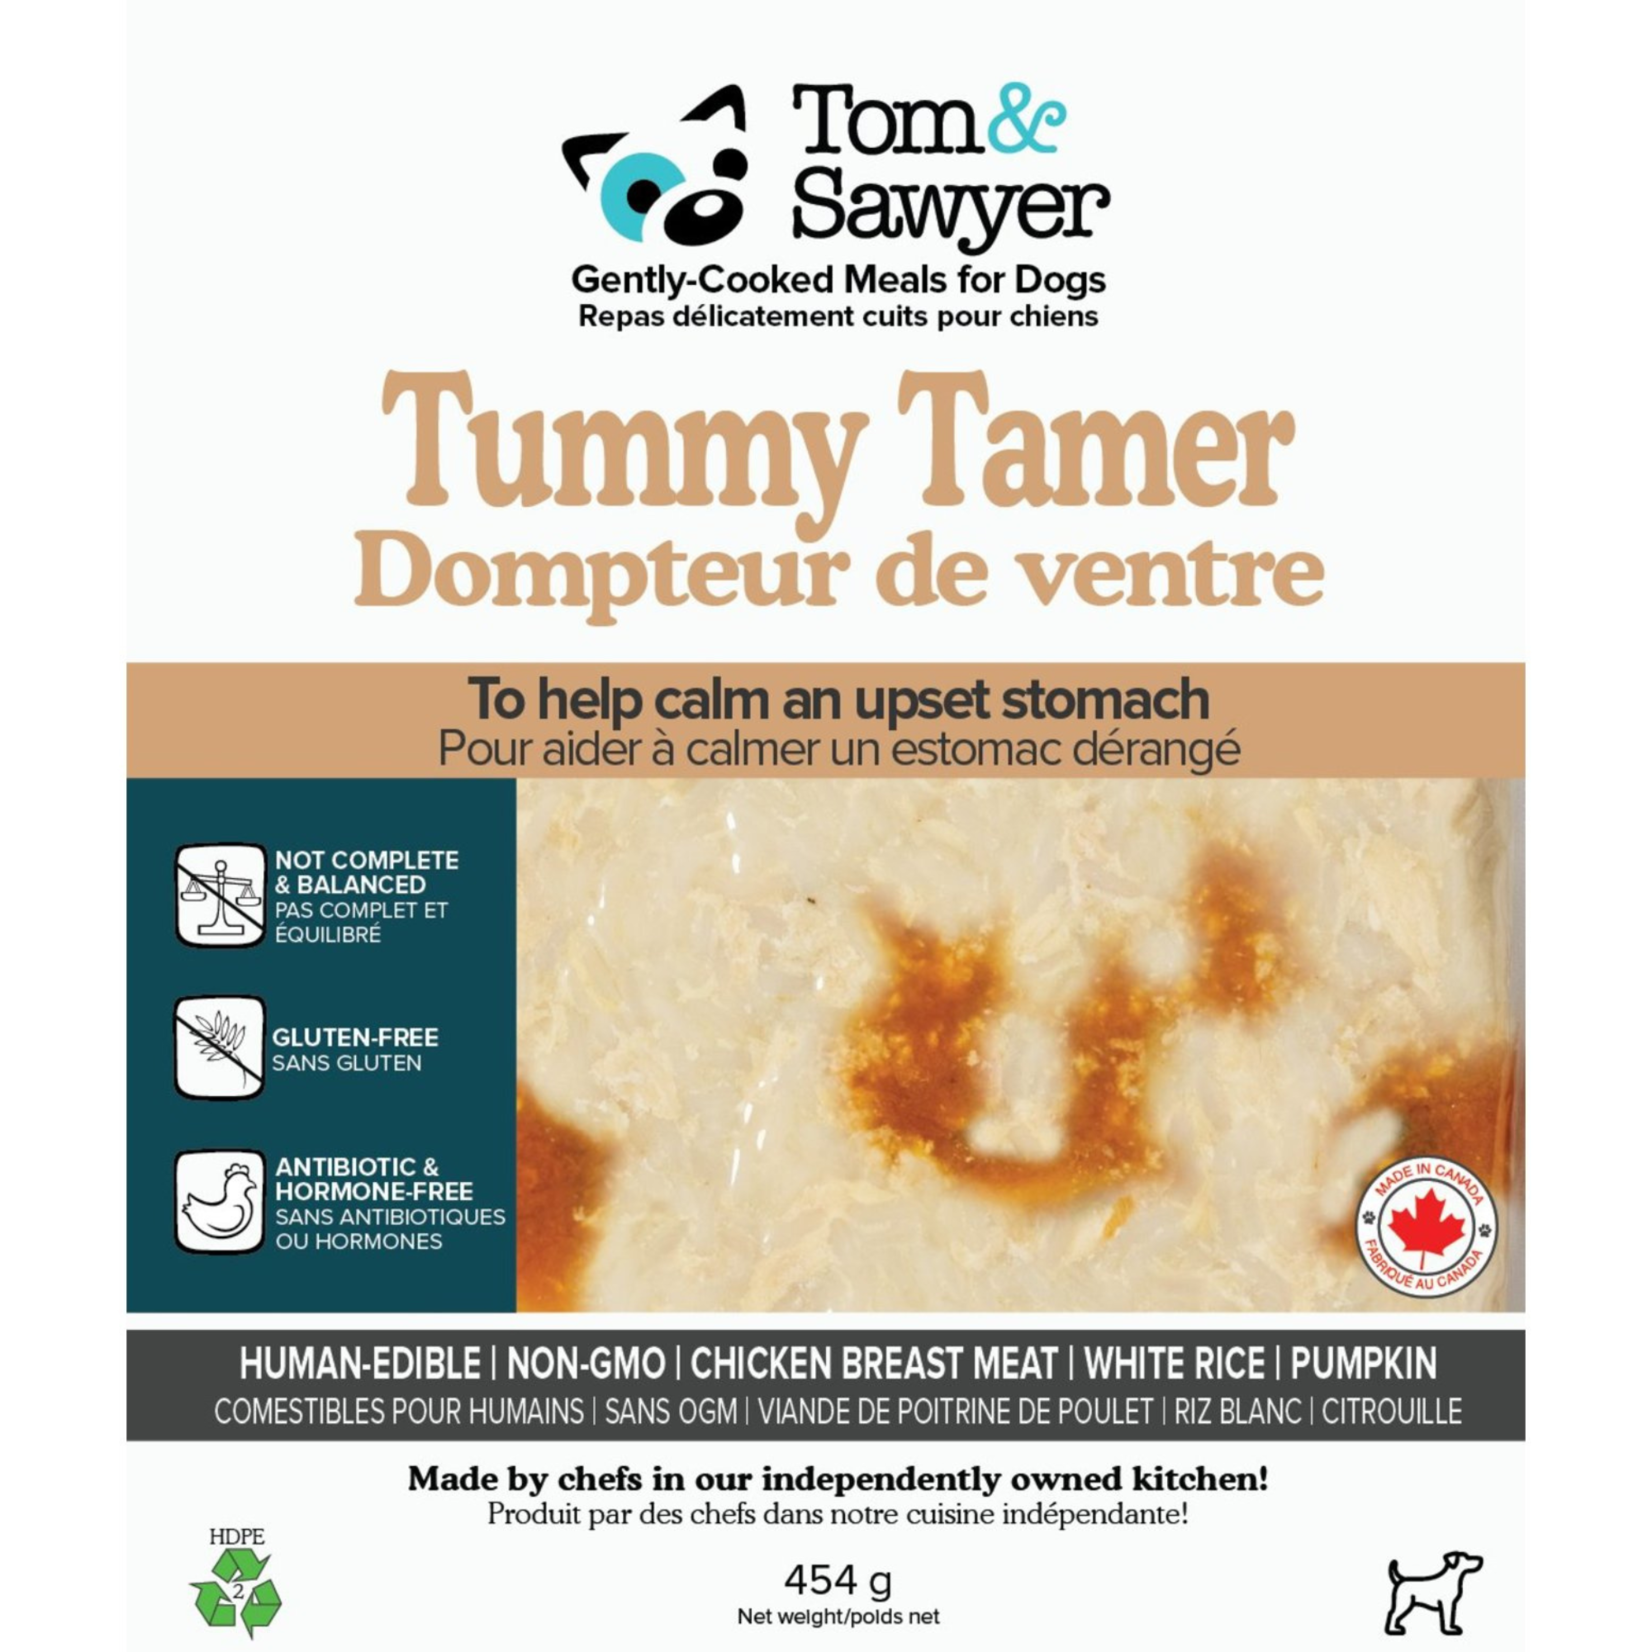 Tom & Sawyer Tom & Sawyer: Tummy Tamer 454g